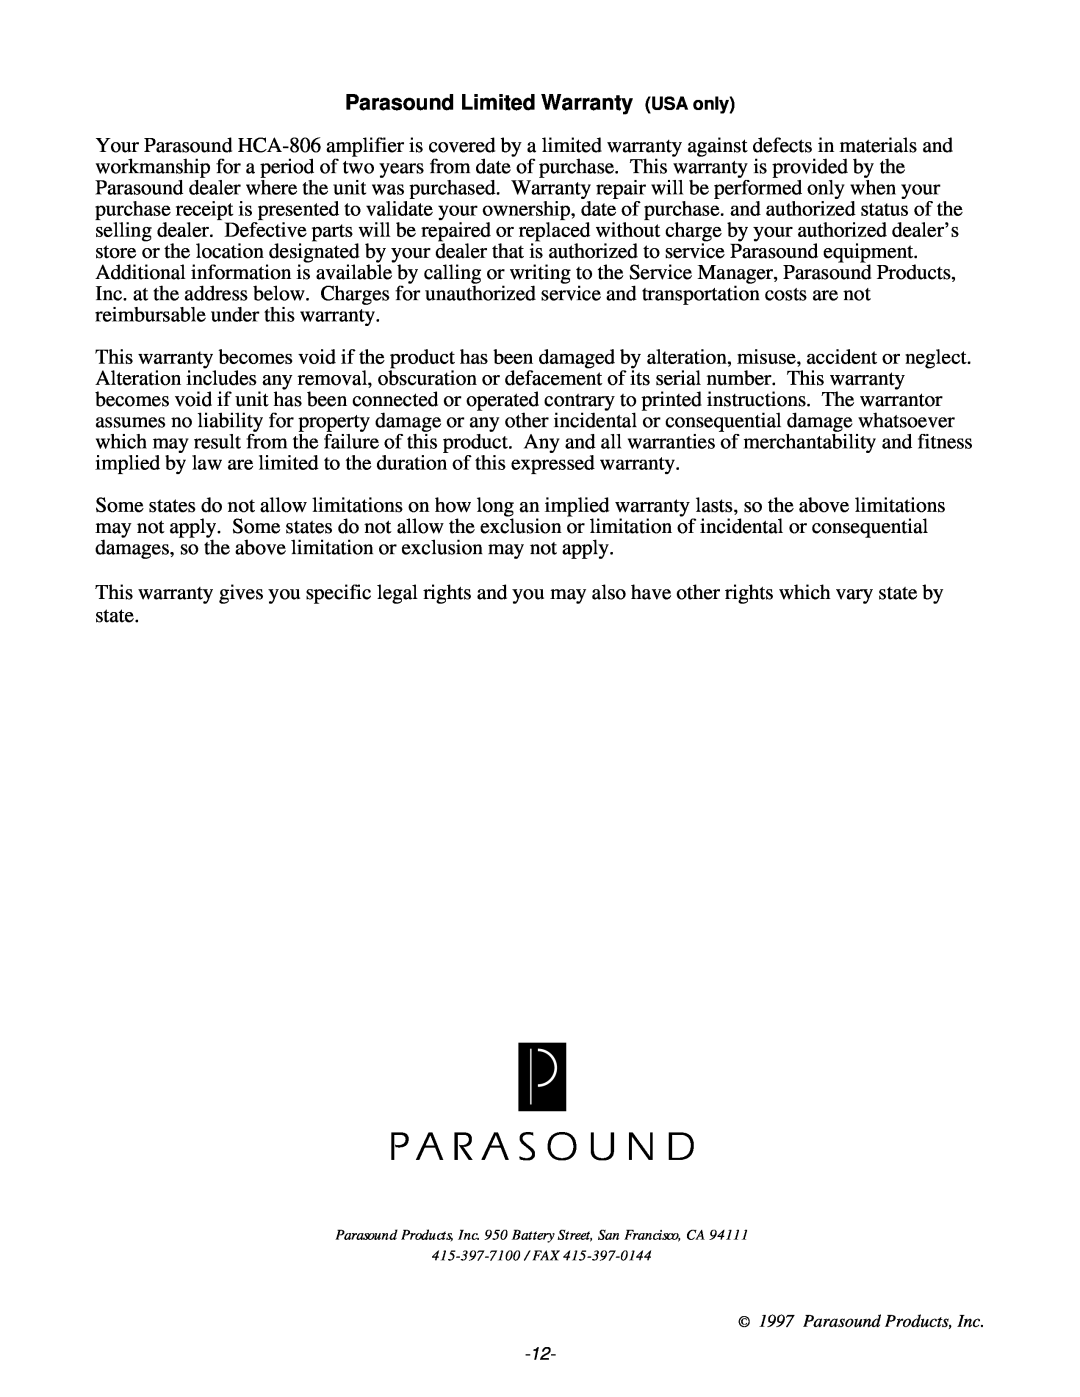 Parasound HCA 806A owner manual Parasound Limited Warranty USA only, Parasound Products, Inc 